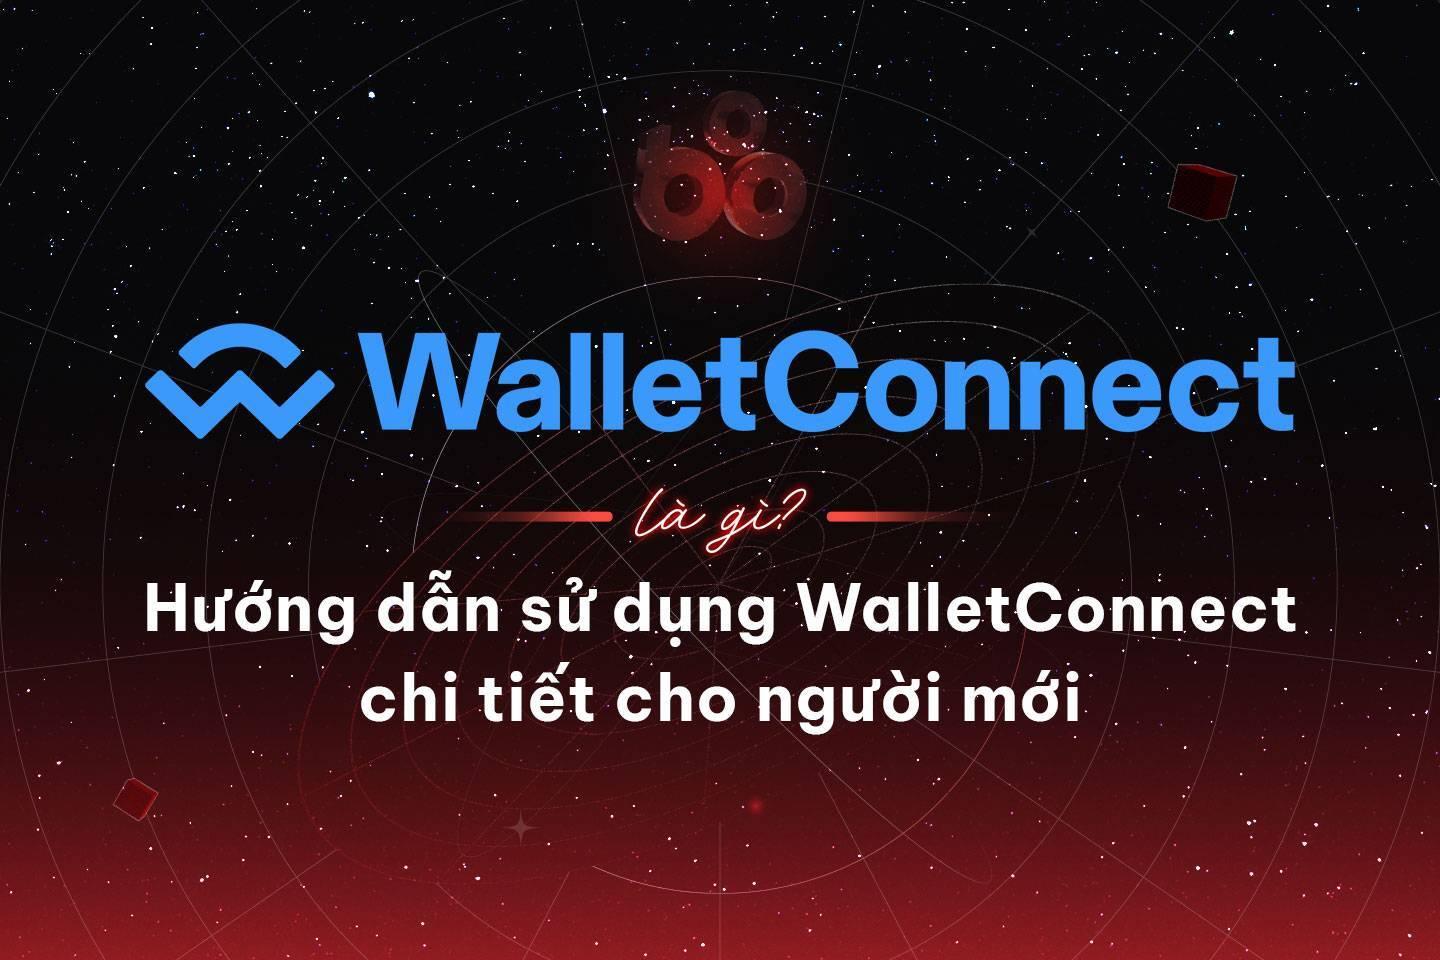 walletconnect-la-gi-huong-dan-su-dung-walletconnect-chi-tiet-cho-nguoi-moi